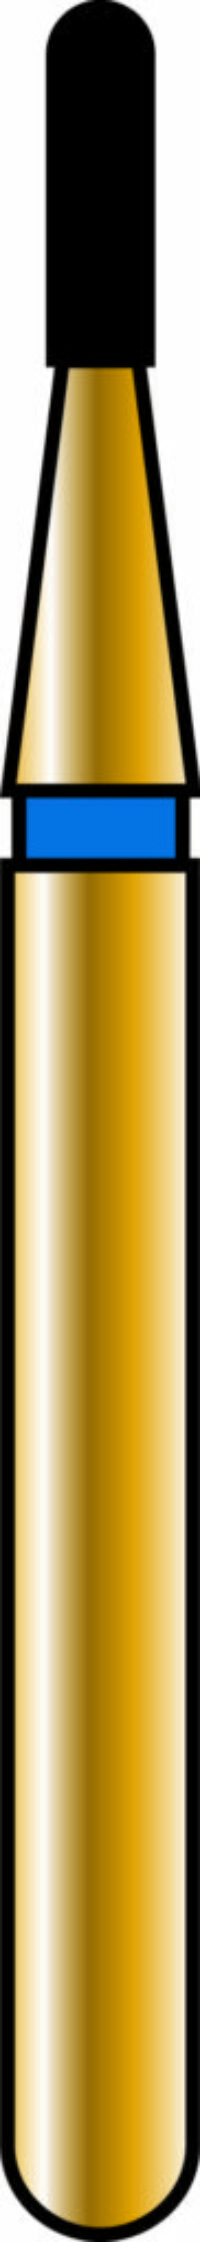 Round End Cylinder 09-3mm Gold Diamond Bur - Coarse Grit